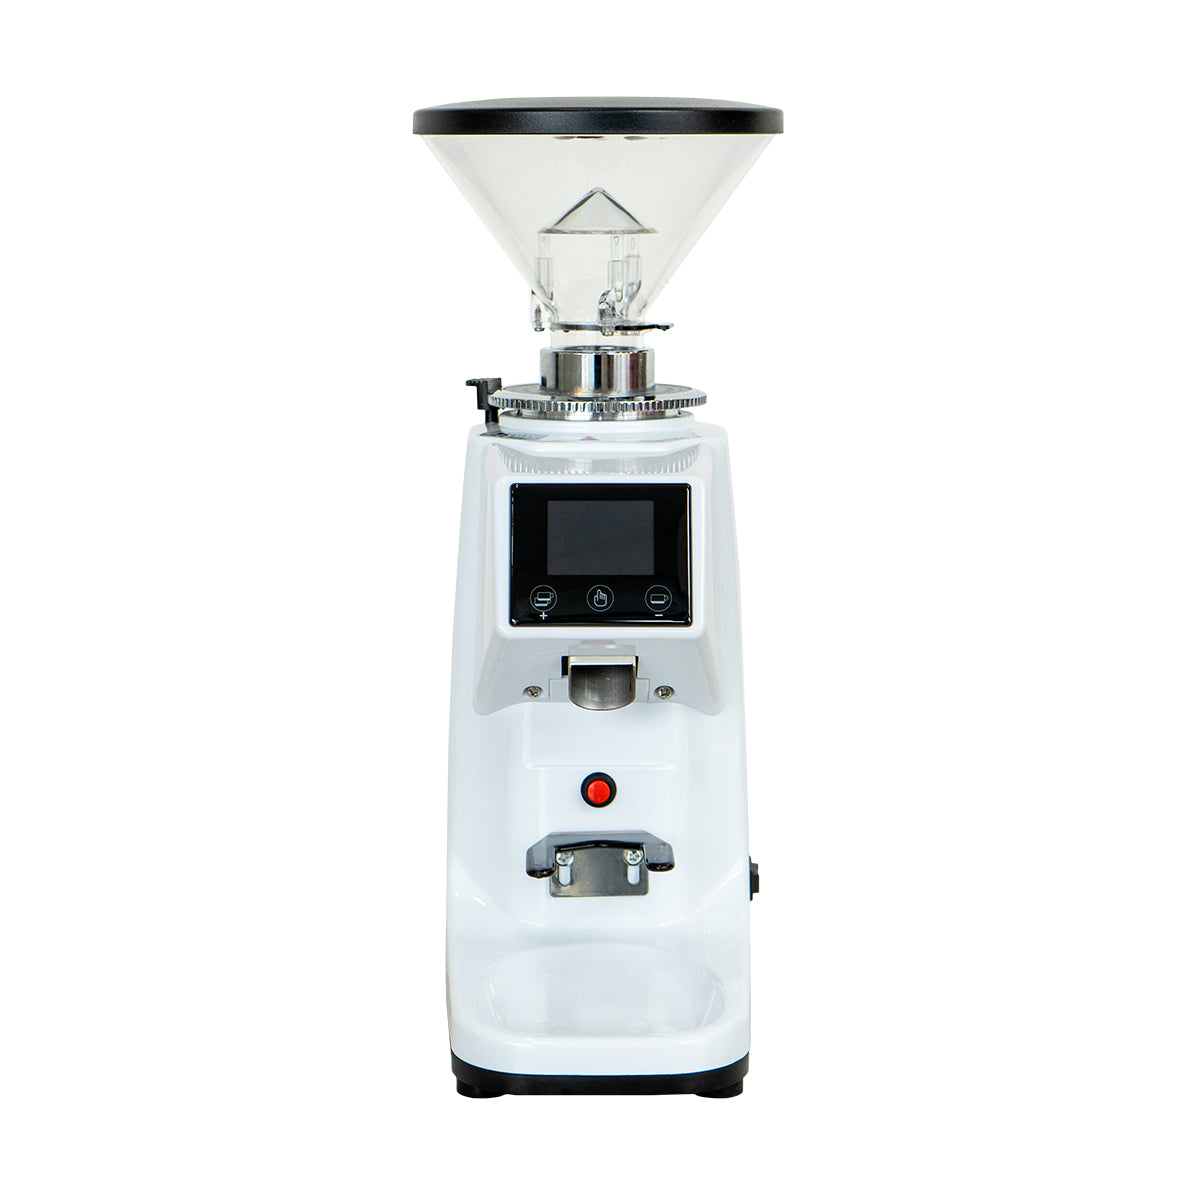 GS7 (Espresso) Coffee Grinder